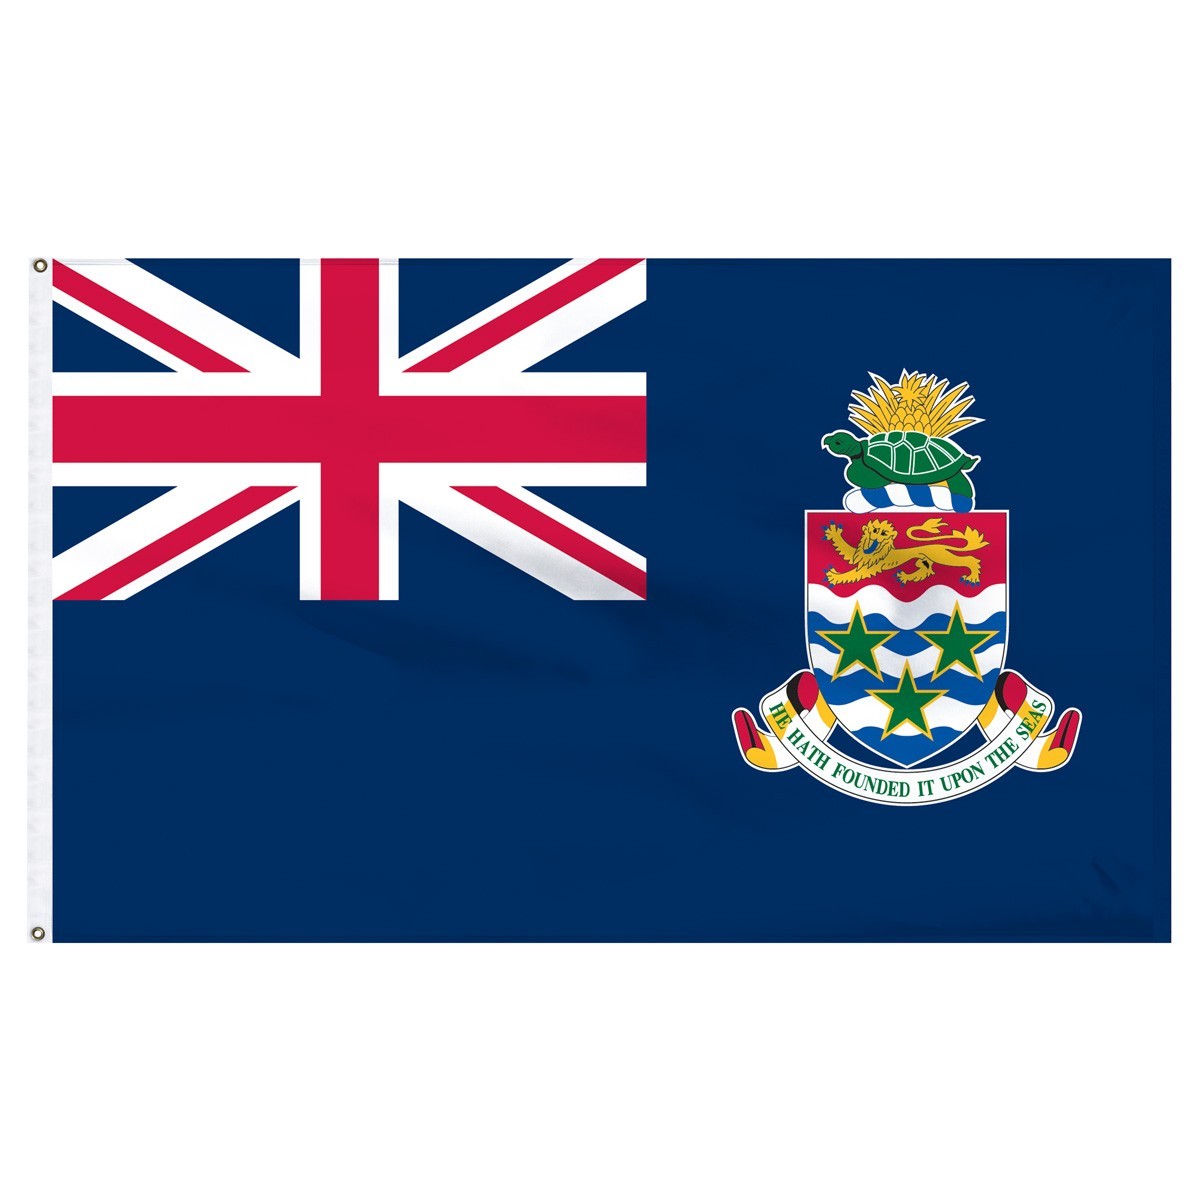 Cayman Islands 3' x 5' Outdoor Nylon Flag